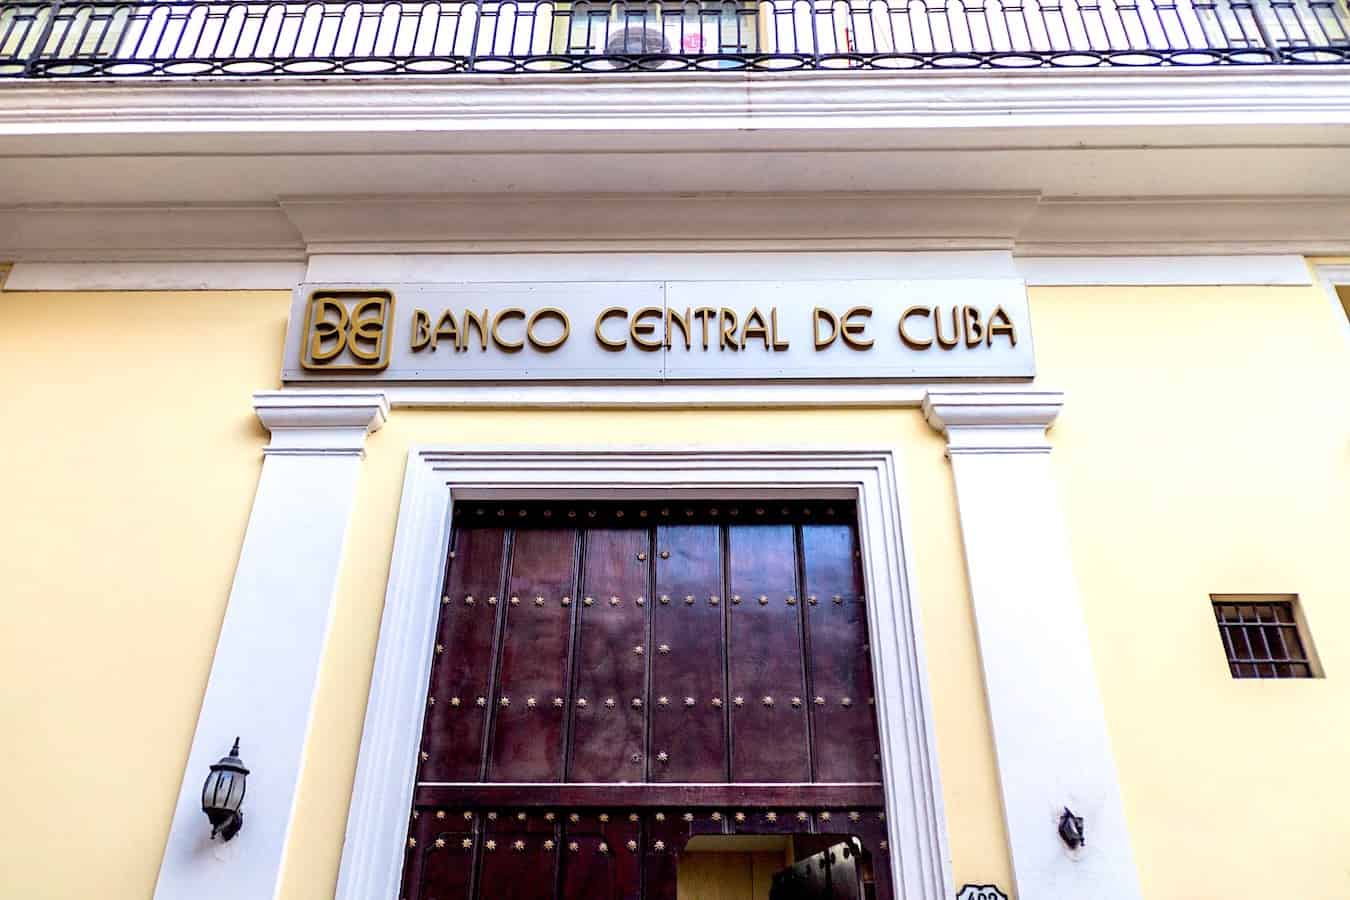 Central bank of Cuba